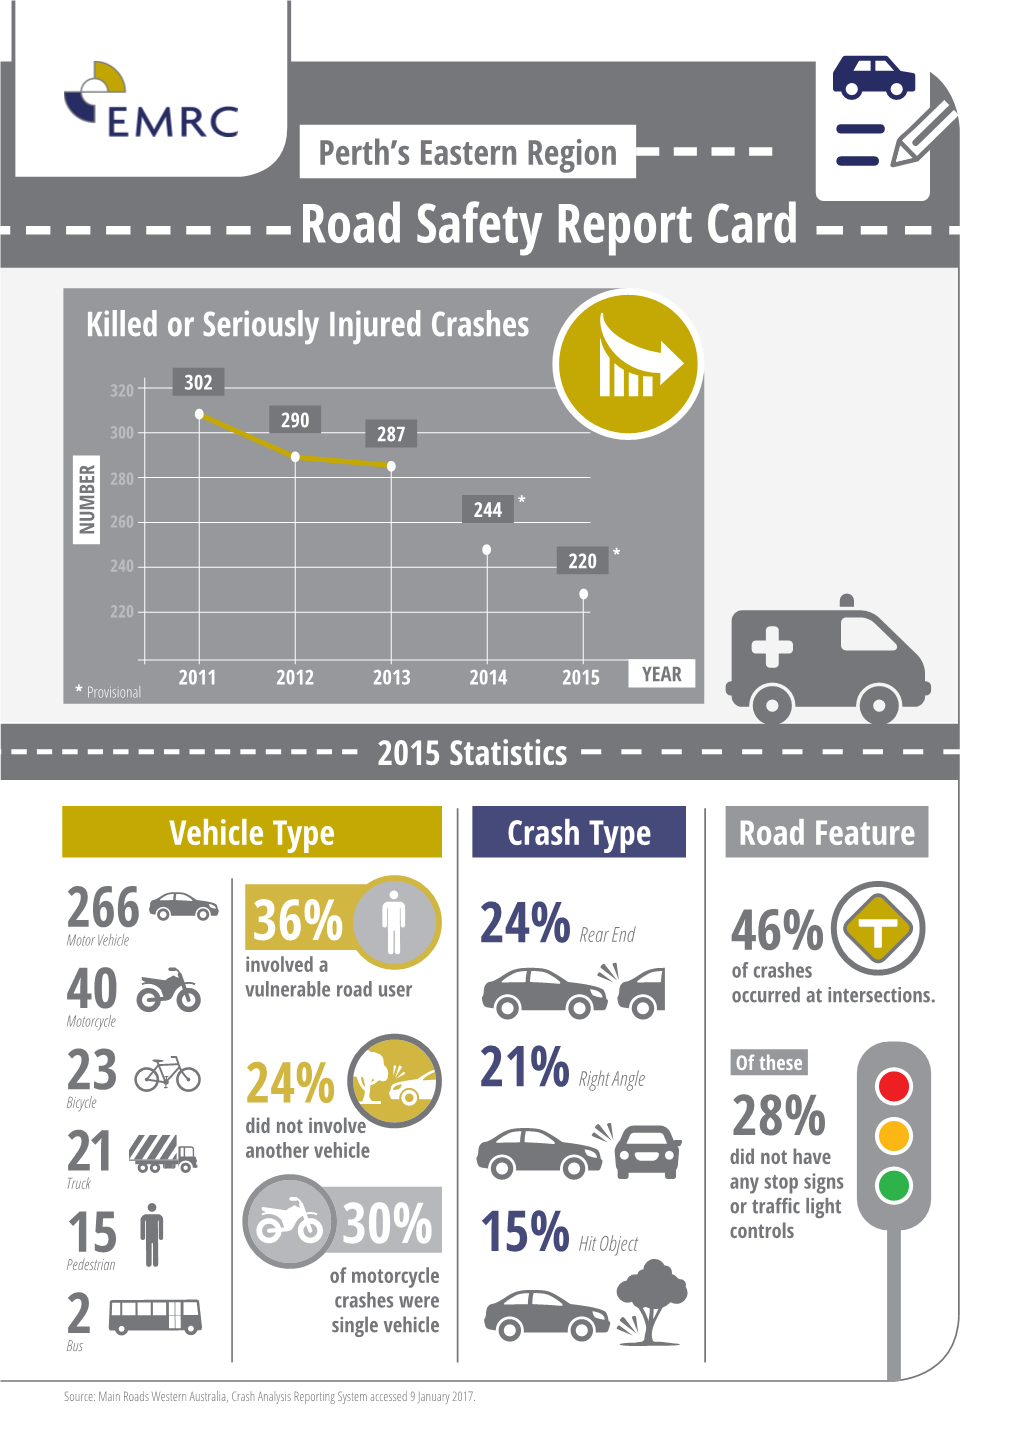 Road Fatalities in Perth's Eastern Region Between 2011 and 2015